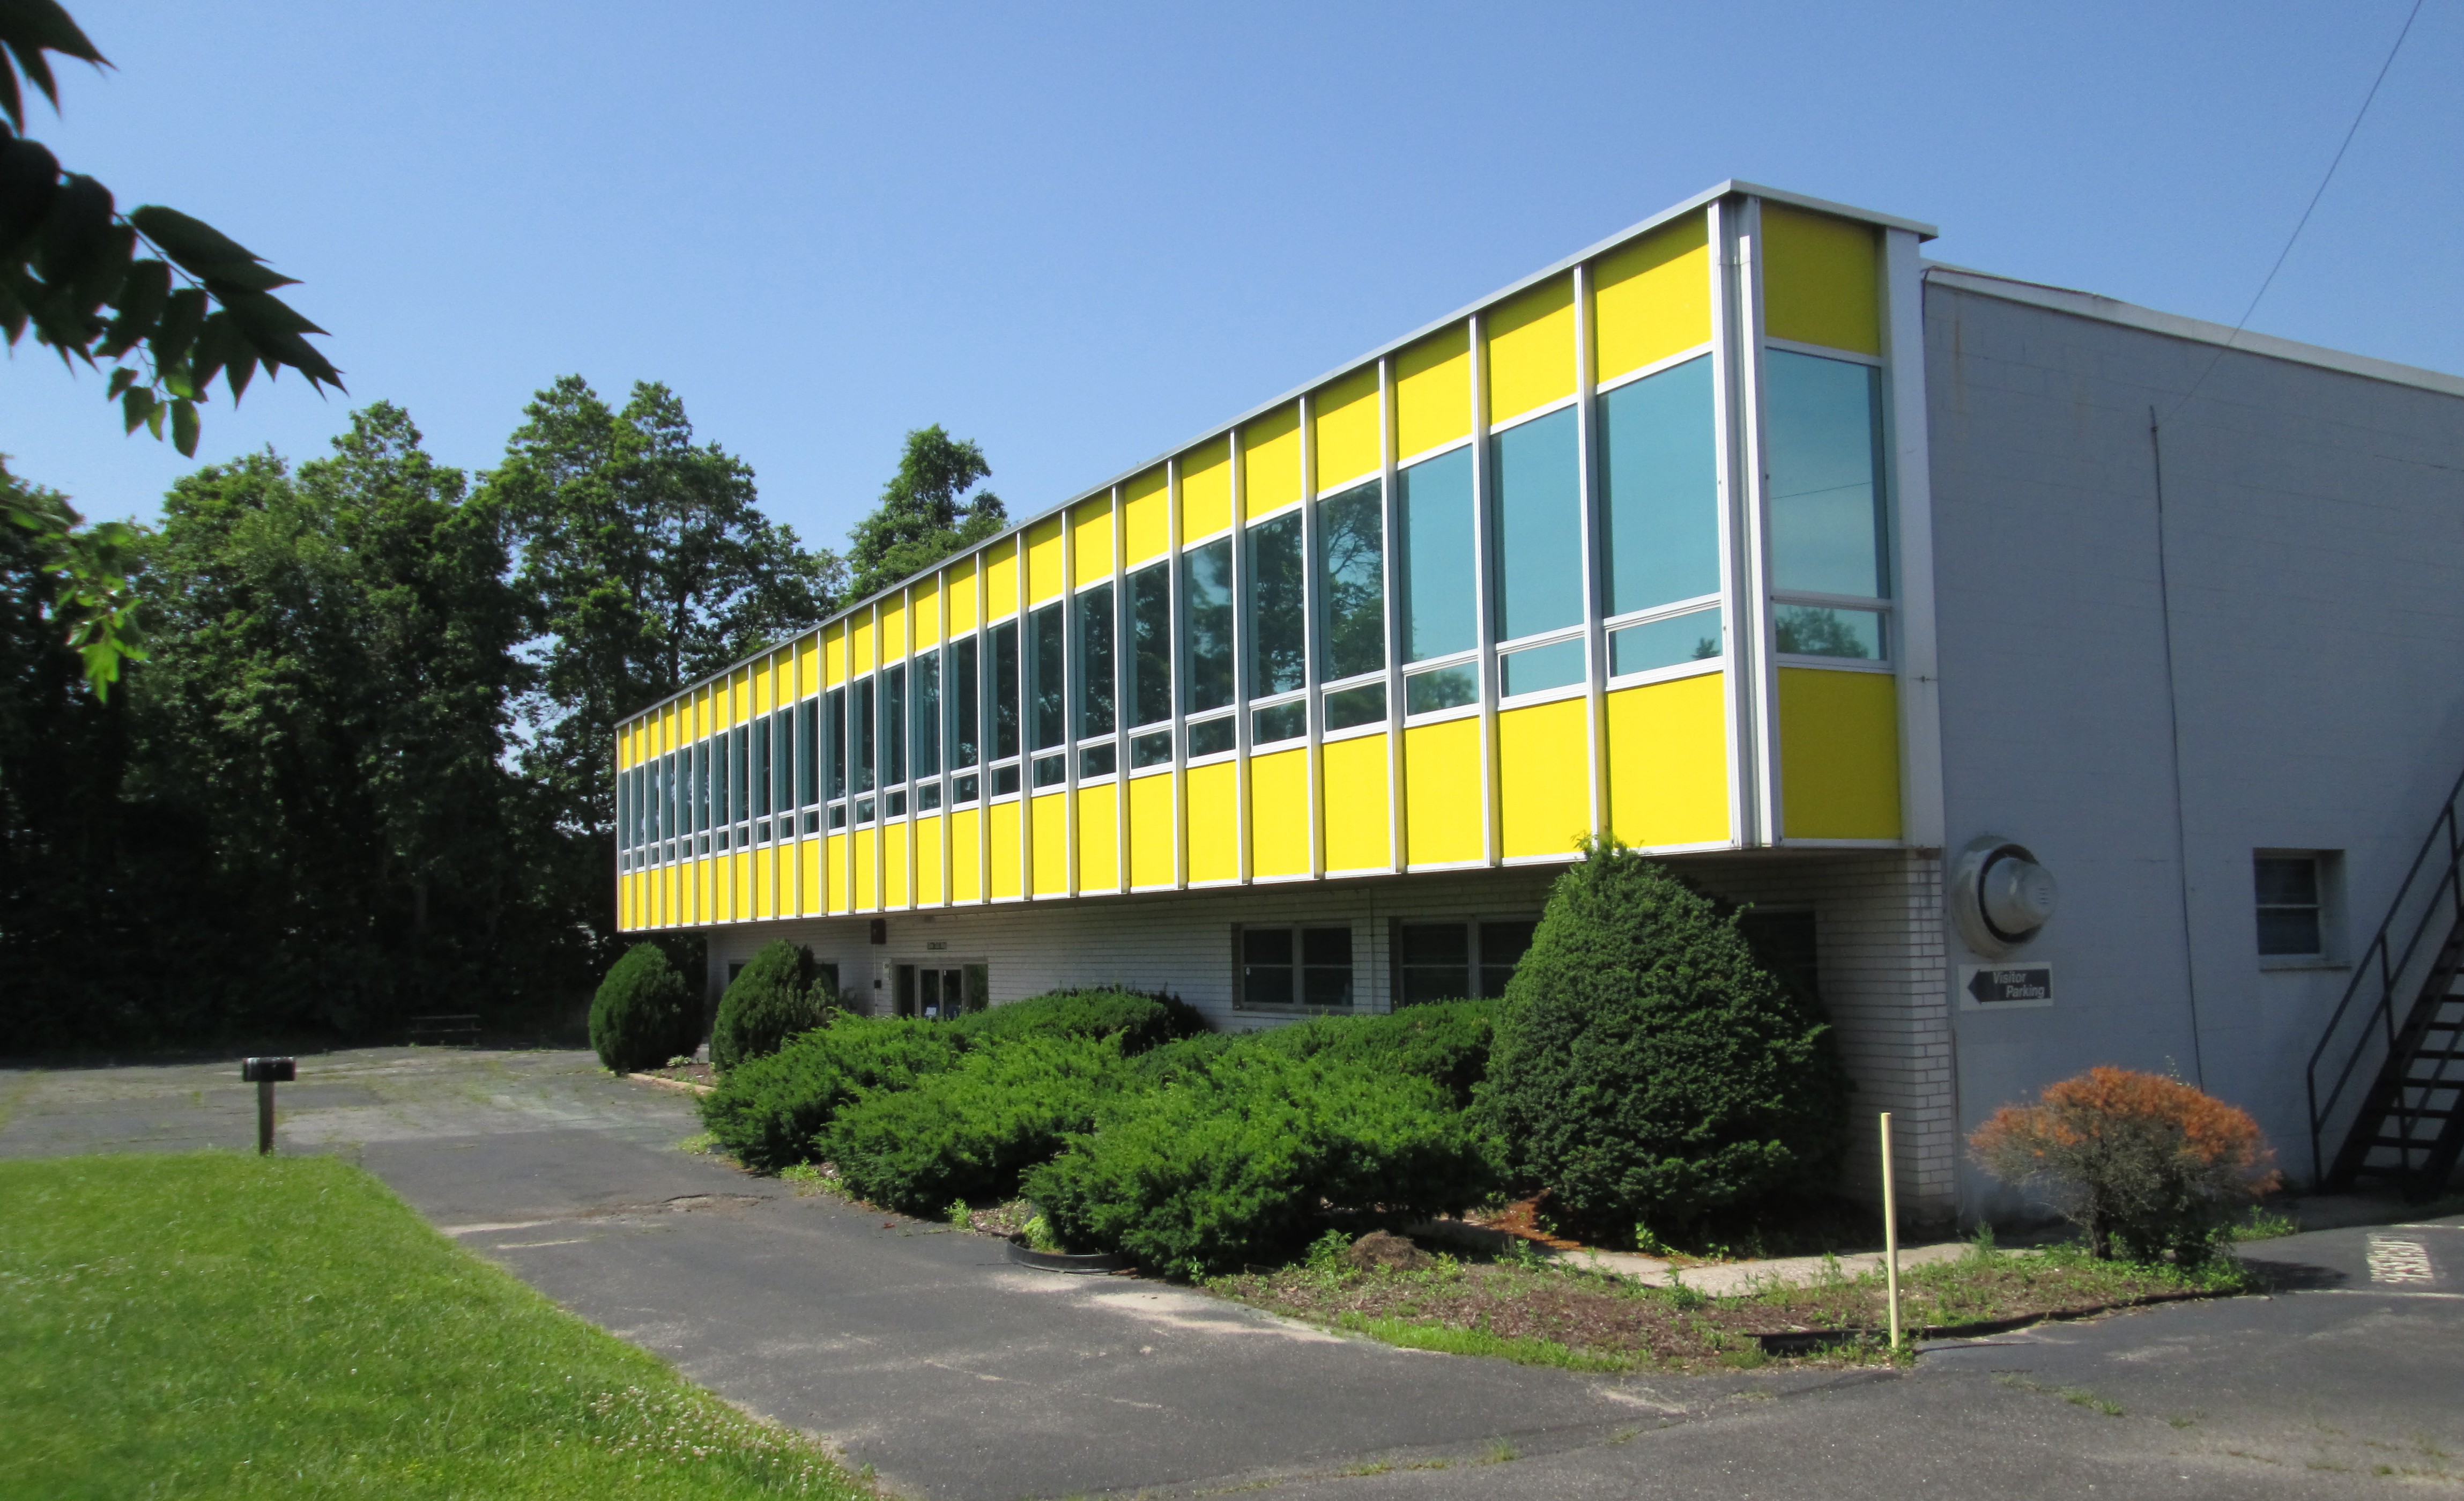 U-Haul Buys Cedar Brook Self Storage in New Jersey